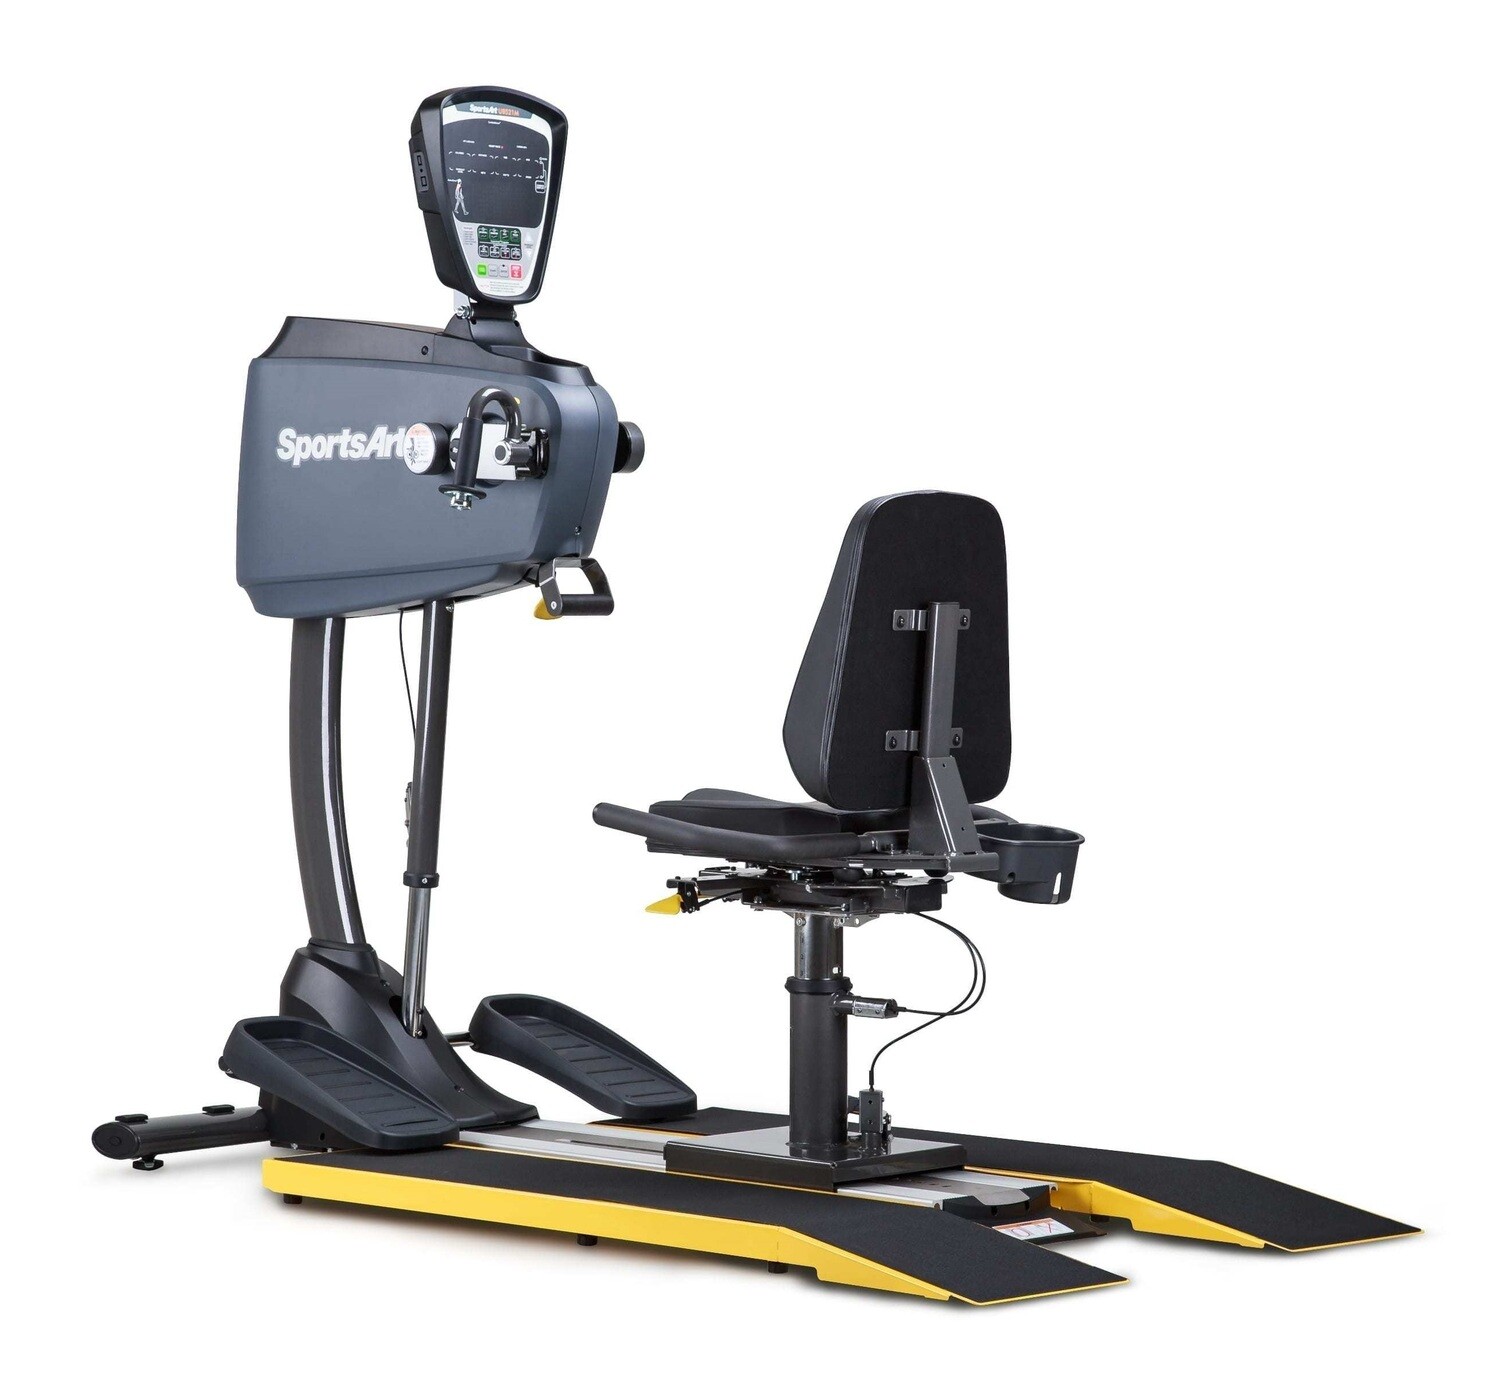 SportsArt Bilateral Upper body Ergometer w/ Swivel Seat and Wheelchair Ramp